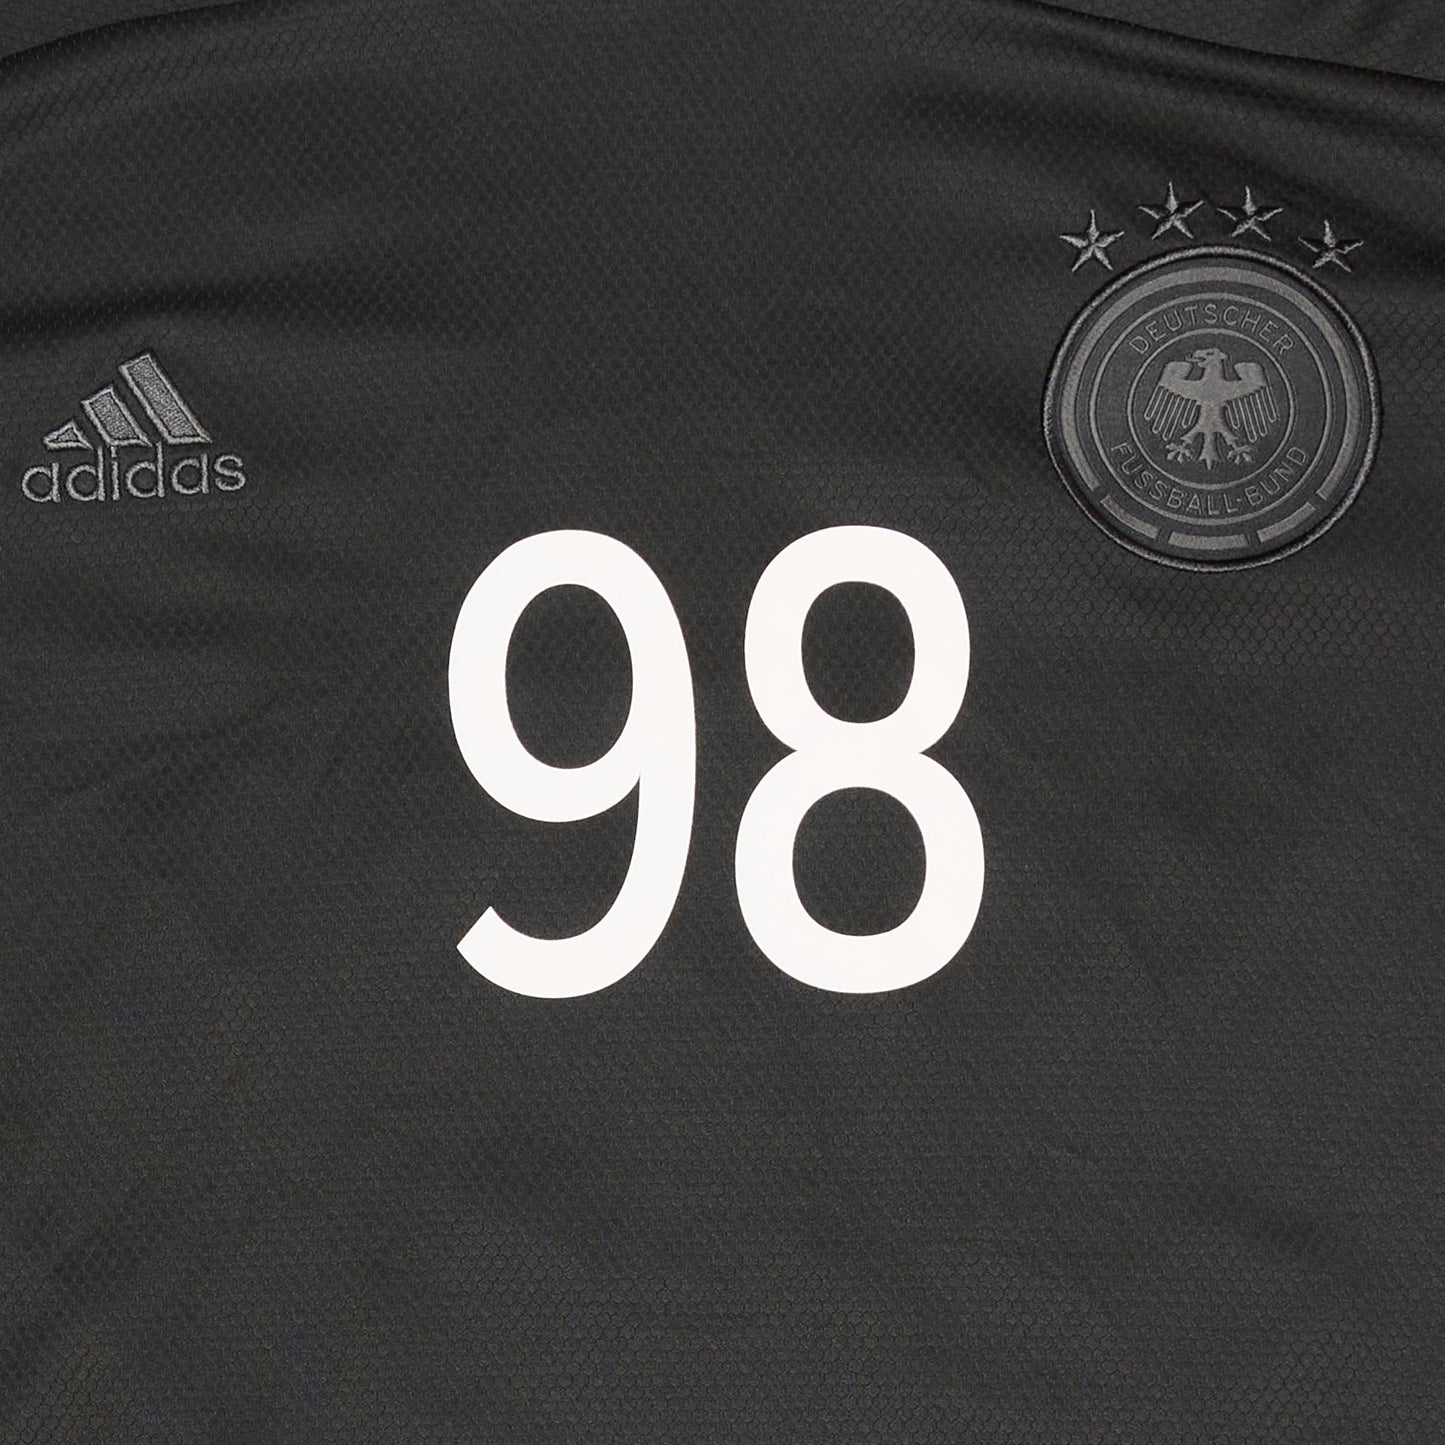 Germany Replica Football Shirt - XXL